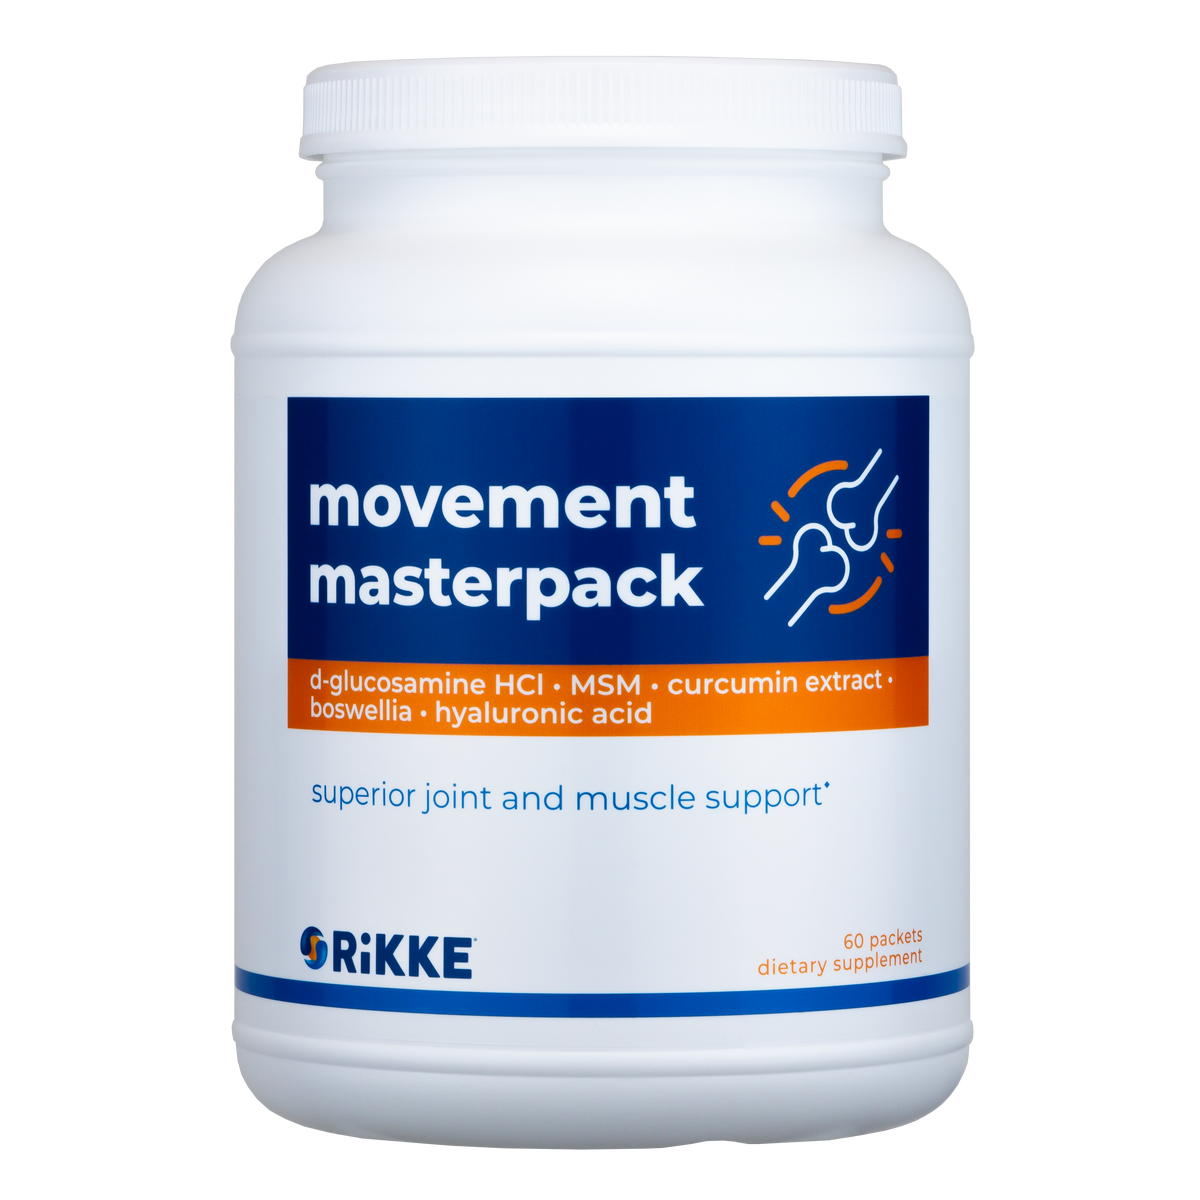 Movement Masterpack